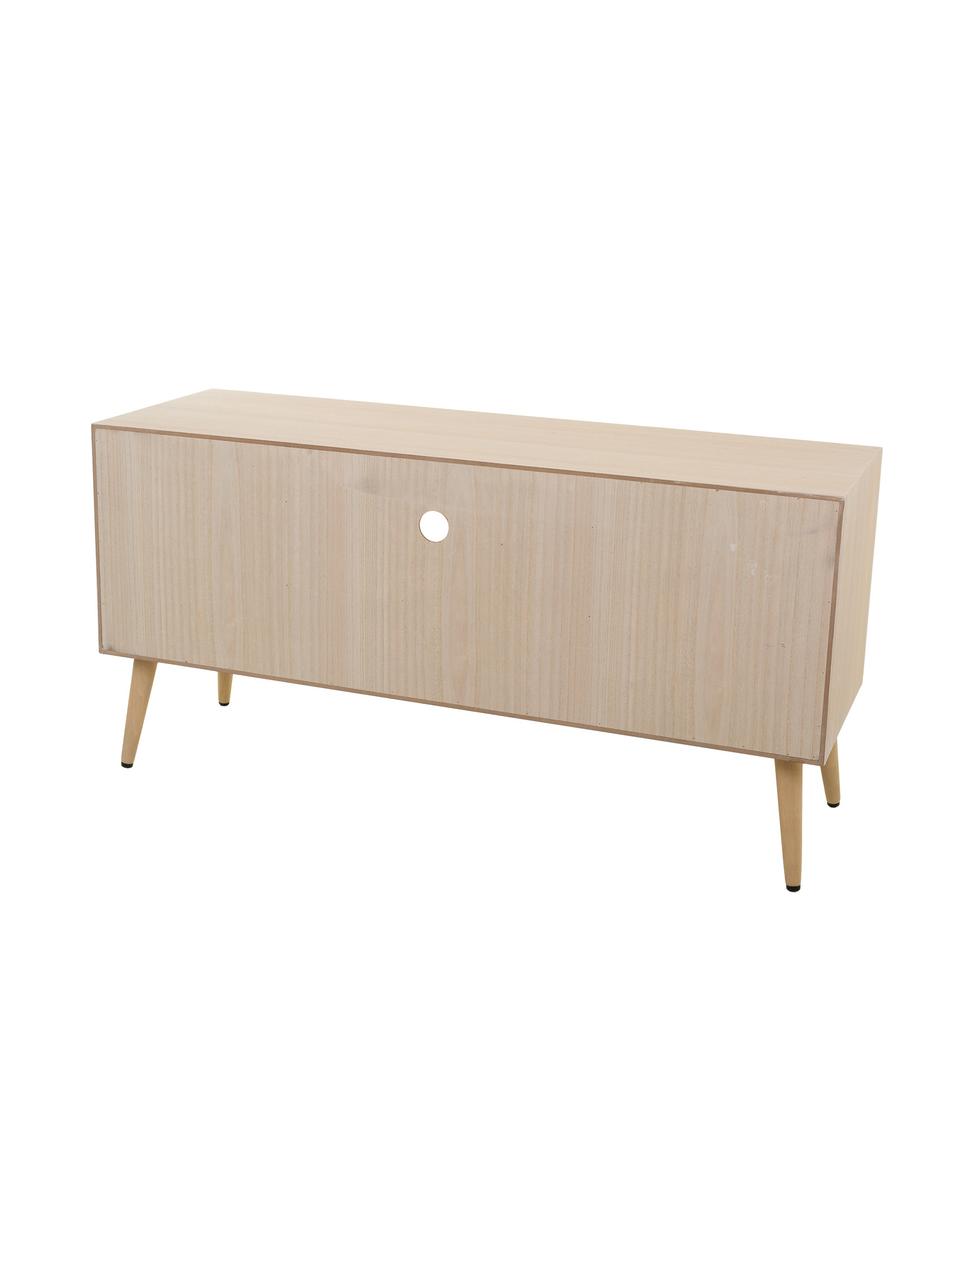 Tv-meubel Cayetana van hout, Frame: MDF, fineer, Handvatten: metaal, Poten: bamboehout, gelakt, Bruin, hout, B 120 cm x H 60 cm